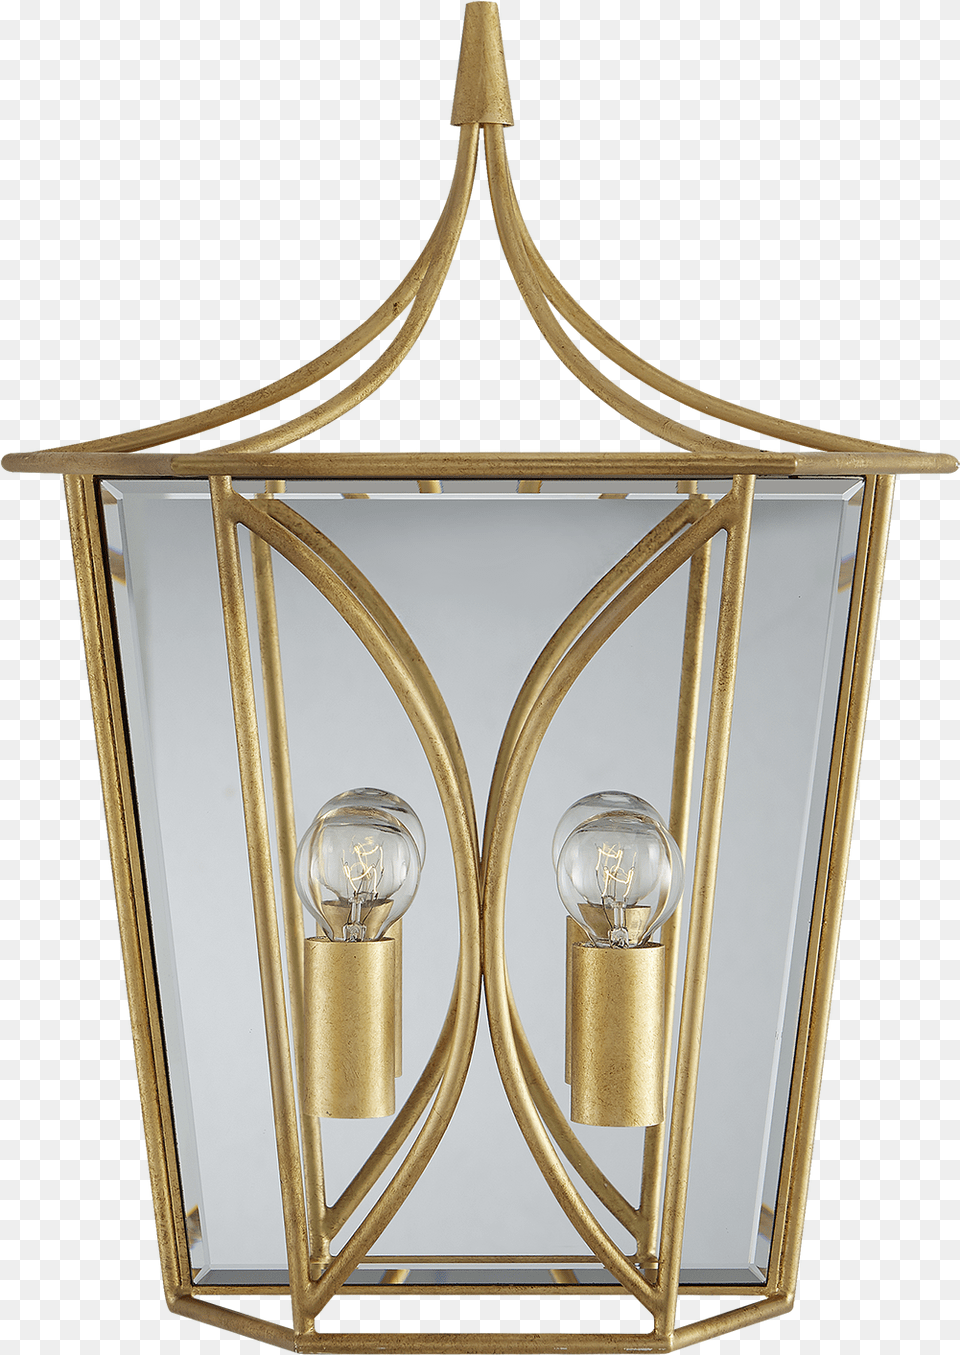 Cavanagh Medium Lantern Sconce In Polished Nickel Sconce, Lamp, Chandelier, Light Fixture Png